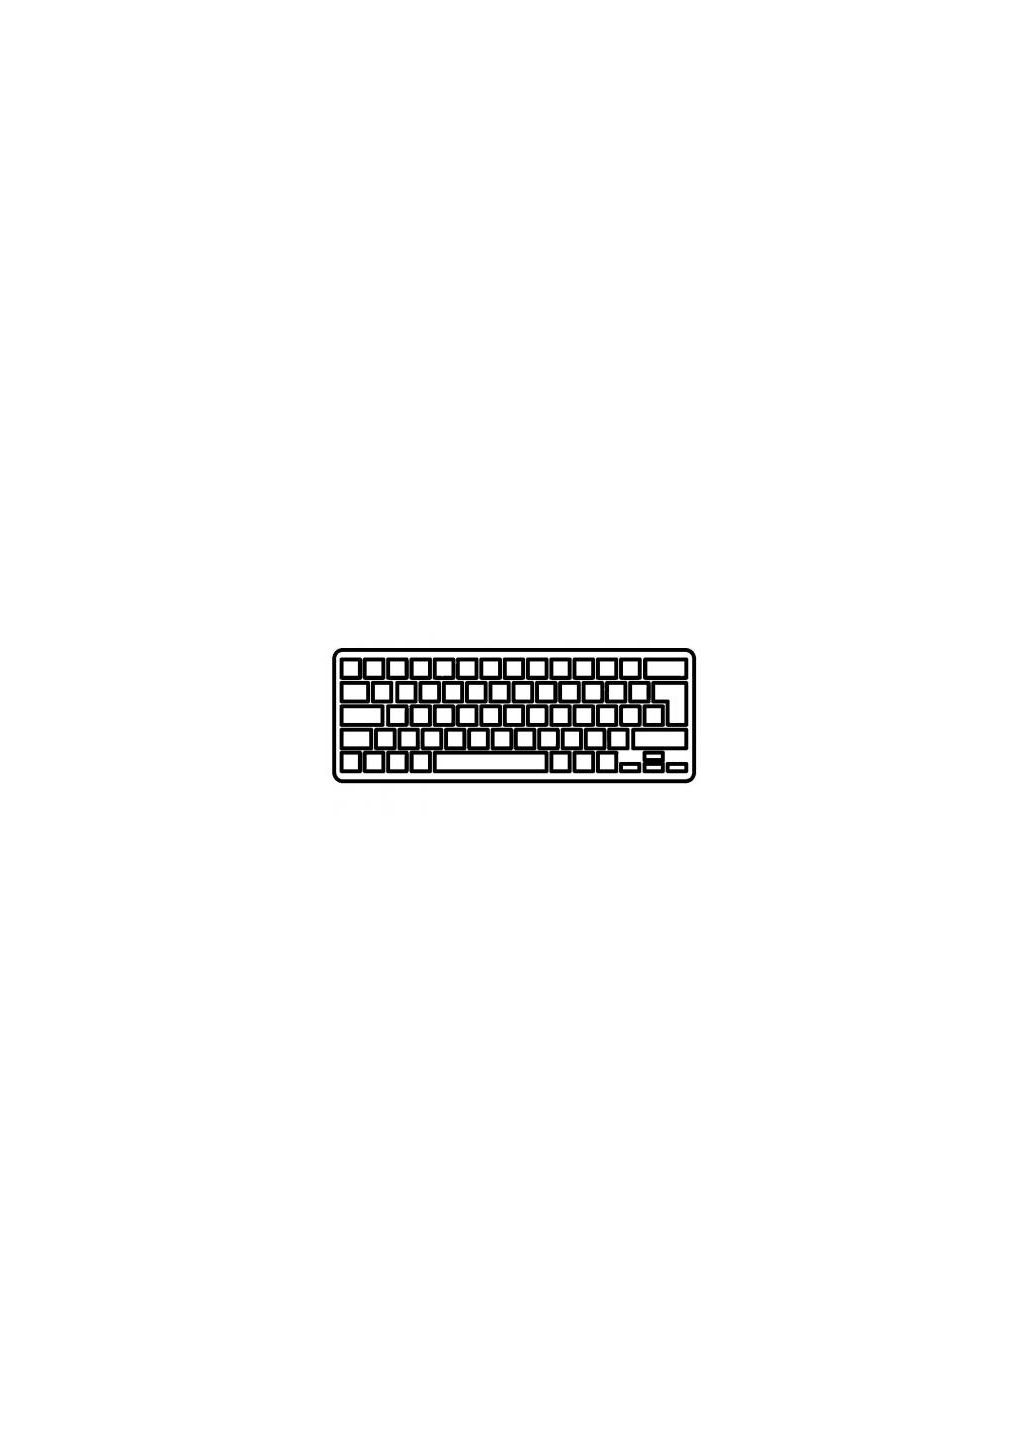 Клавиатура ноутбука XPS 13 9343/9350/Inspiron 137359 черная без рамки подсвет.U (A43892) Dell xps 13 9343/9350/inspiron 13-7359 черная без рамки (276708026)